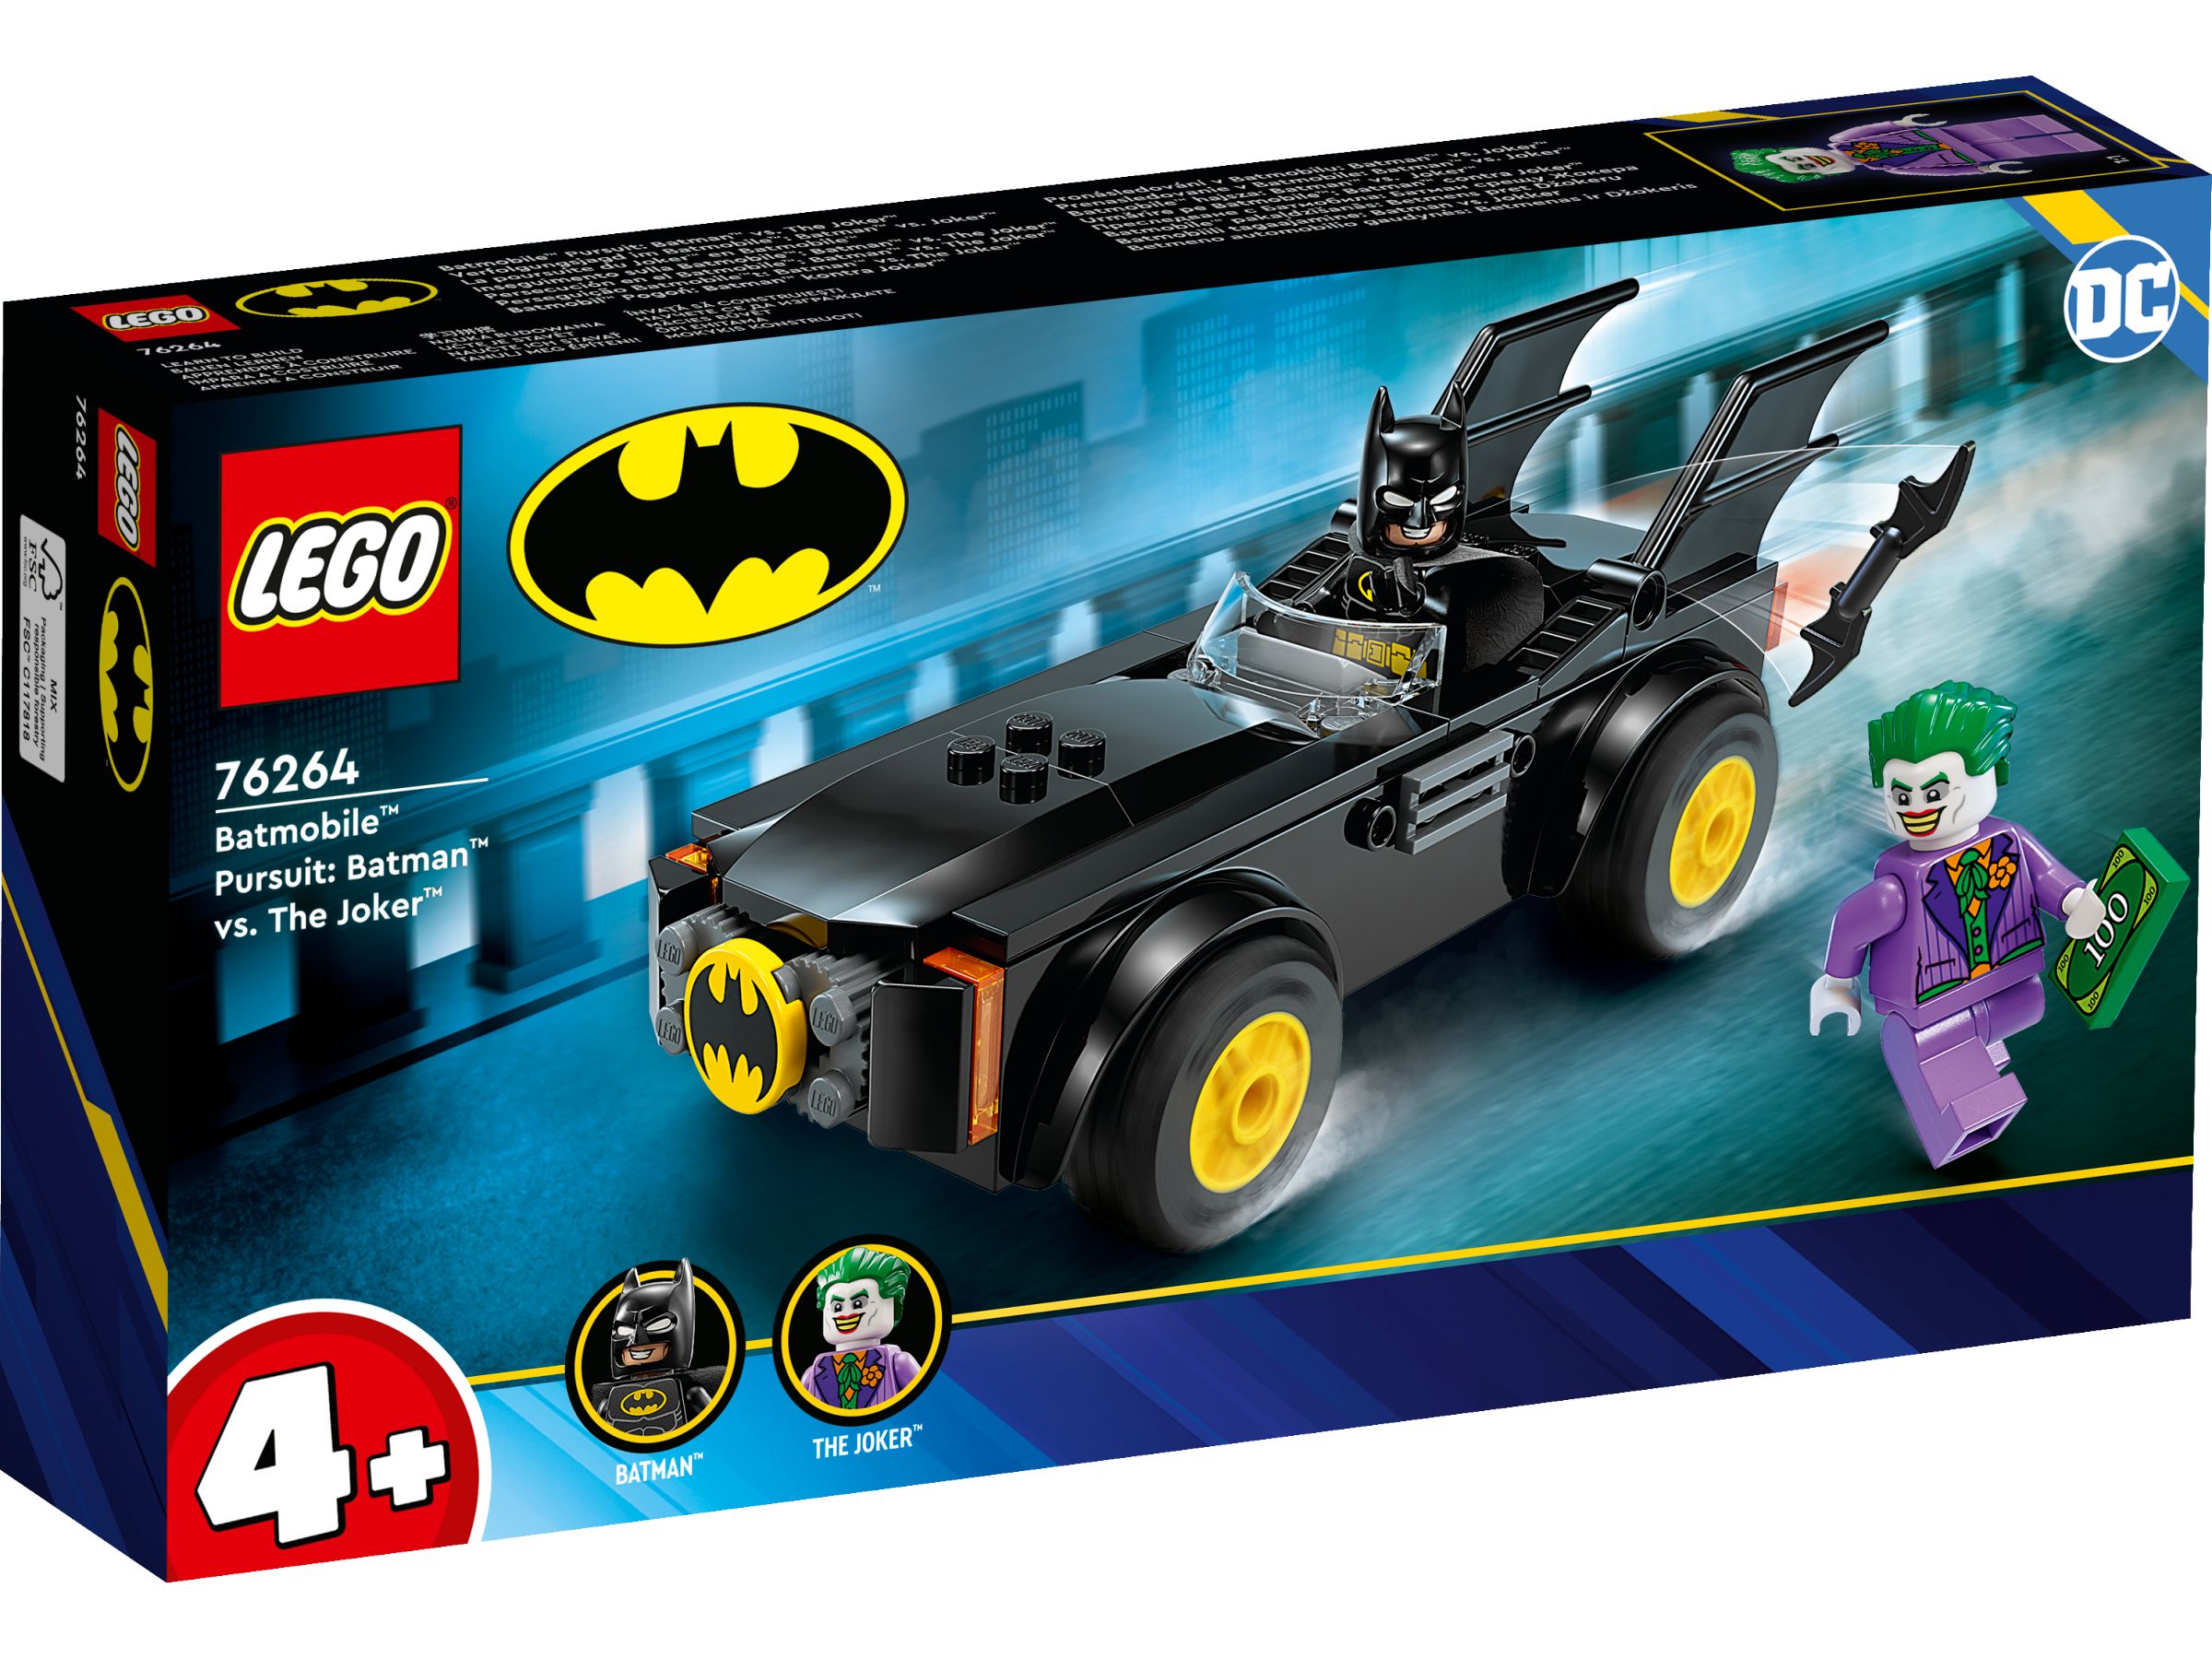 LEGO Super Heroes 76264 Verfolgungsjagd im Batmobile™: Batman™ vs. Joker™ LEGO_76264_Box1_v29.jpg